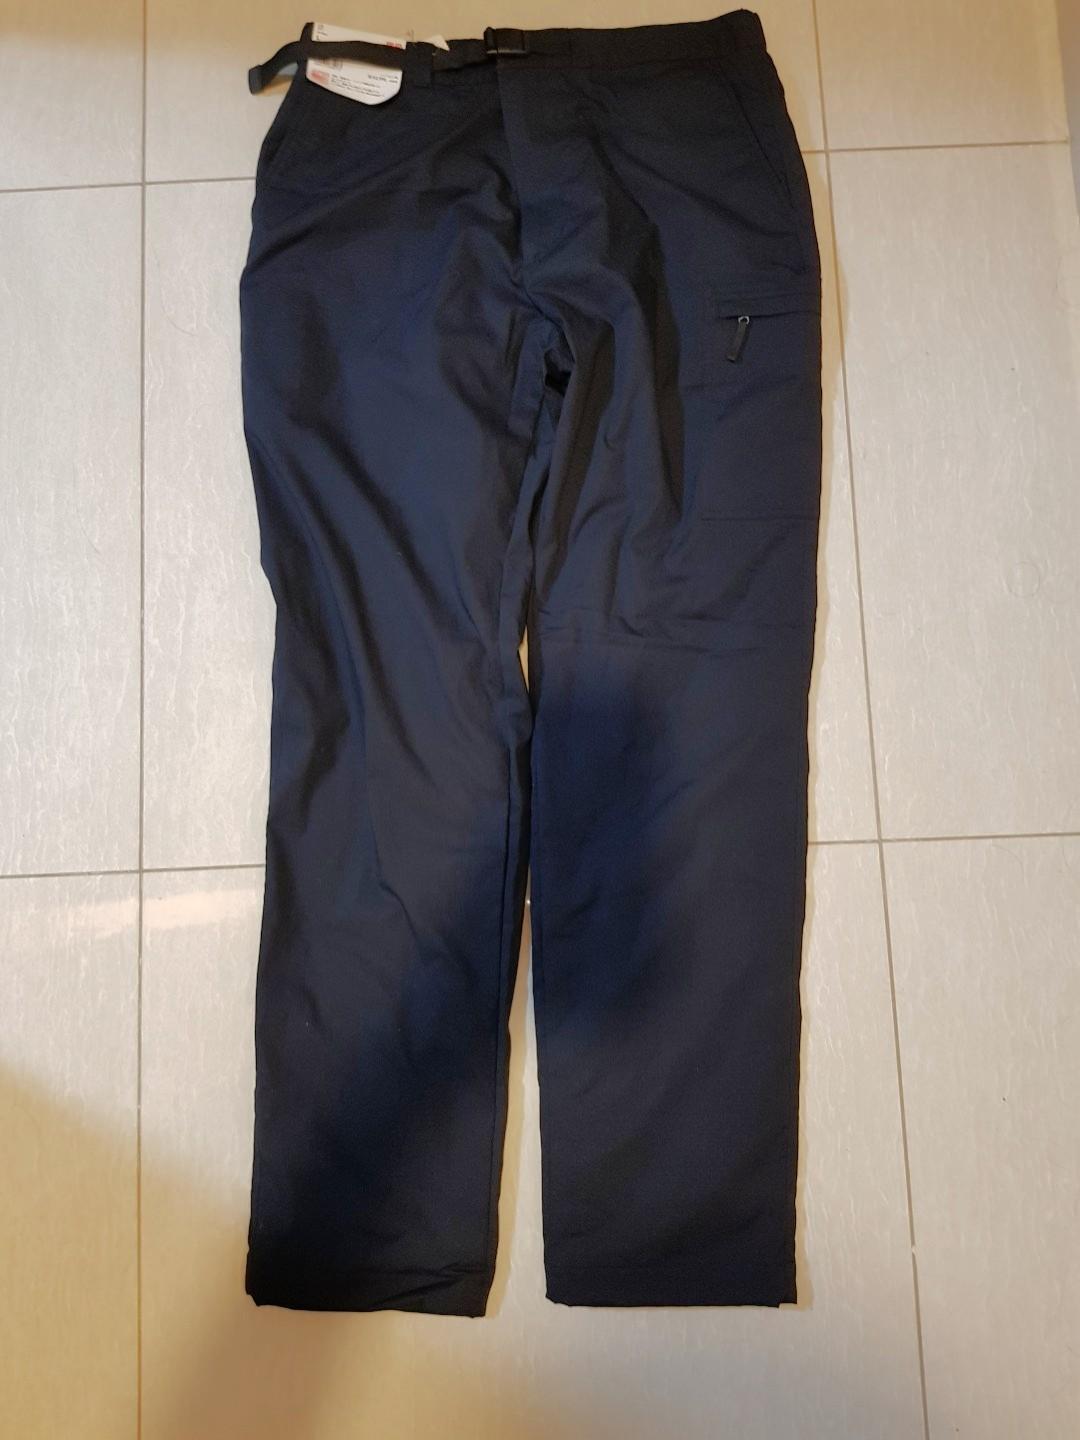 UNIQLO Heattech Warm Lined Pant, Navy Blue, L-Sized, Men's Fashion ...